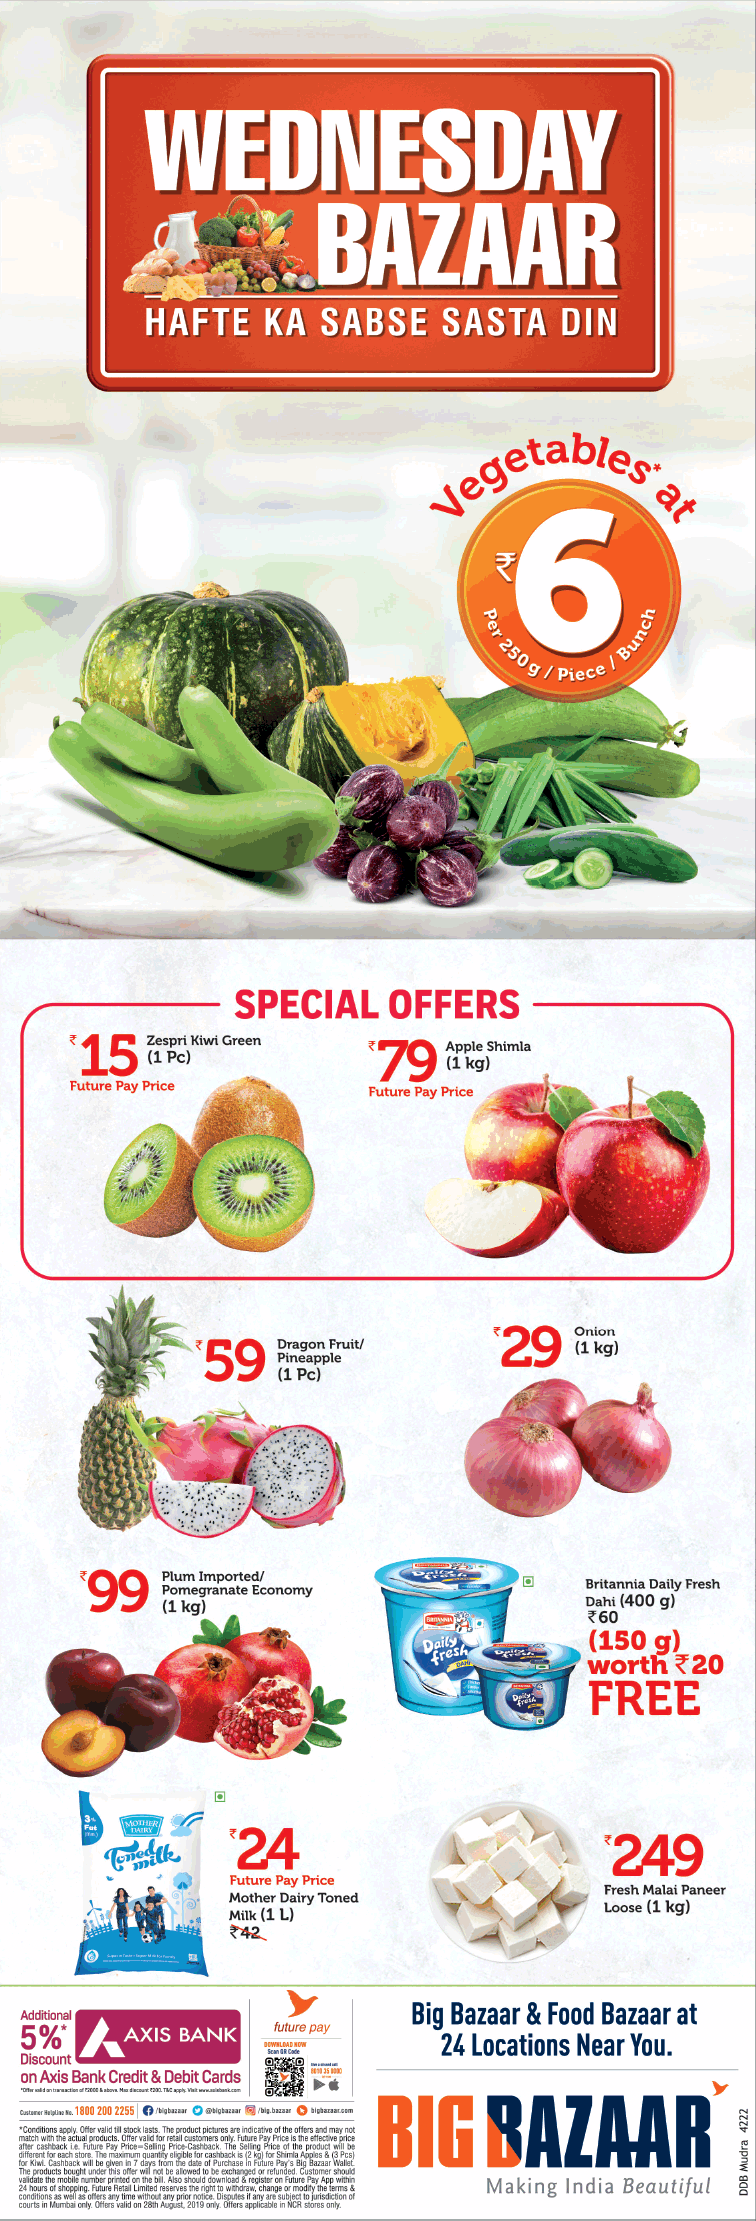 big-bazaar-wednesday-bazaar-vegetables-at-rs-6-for-250-grams-ad-delhi-times-28-08-2019.png